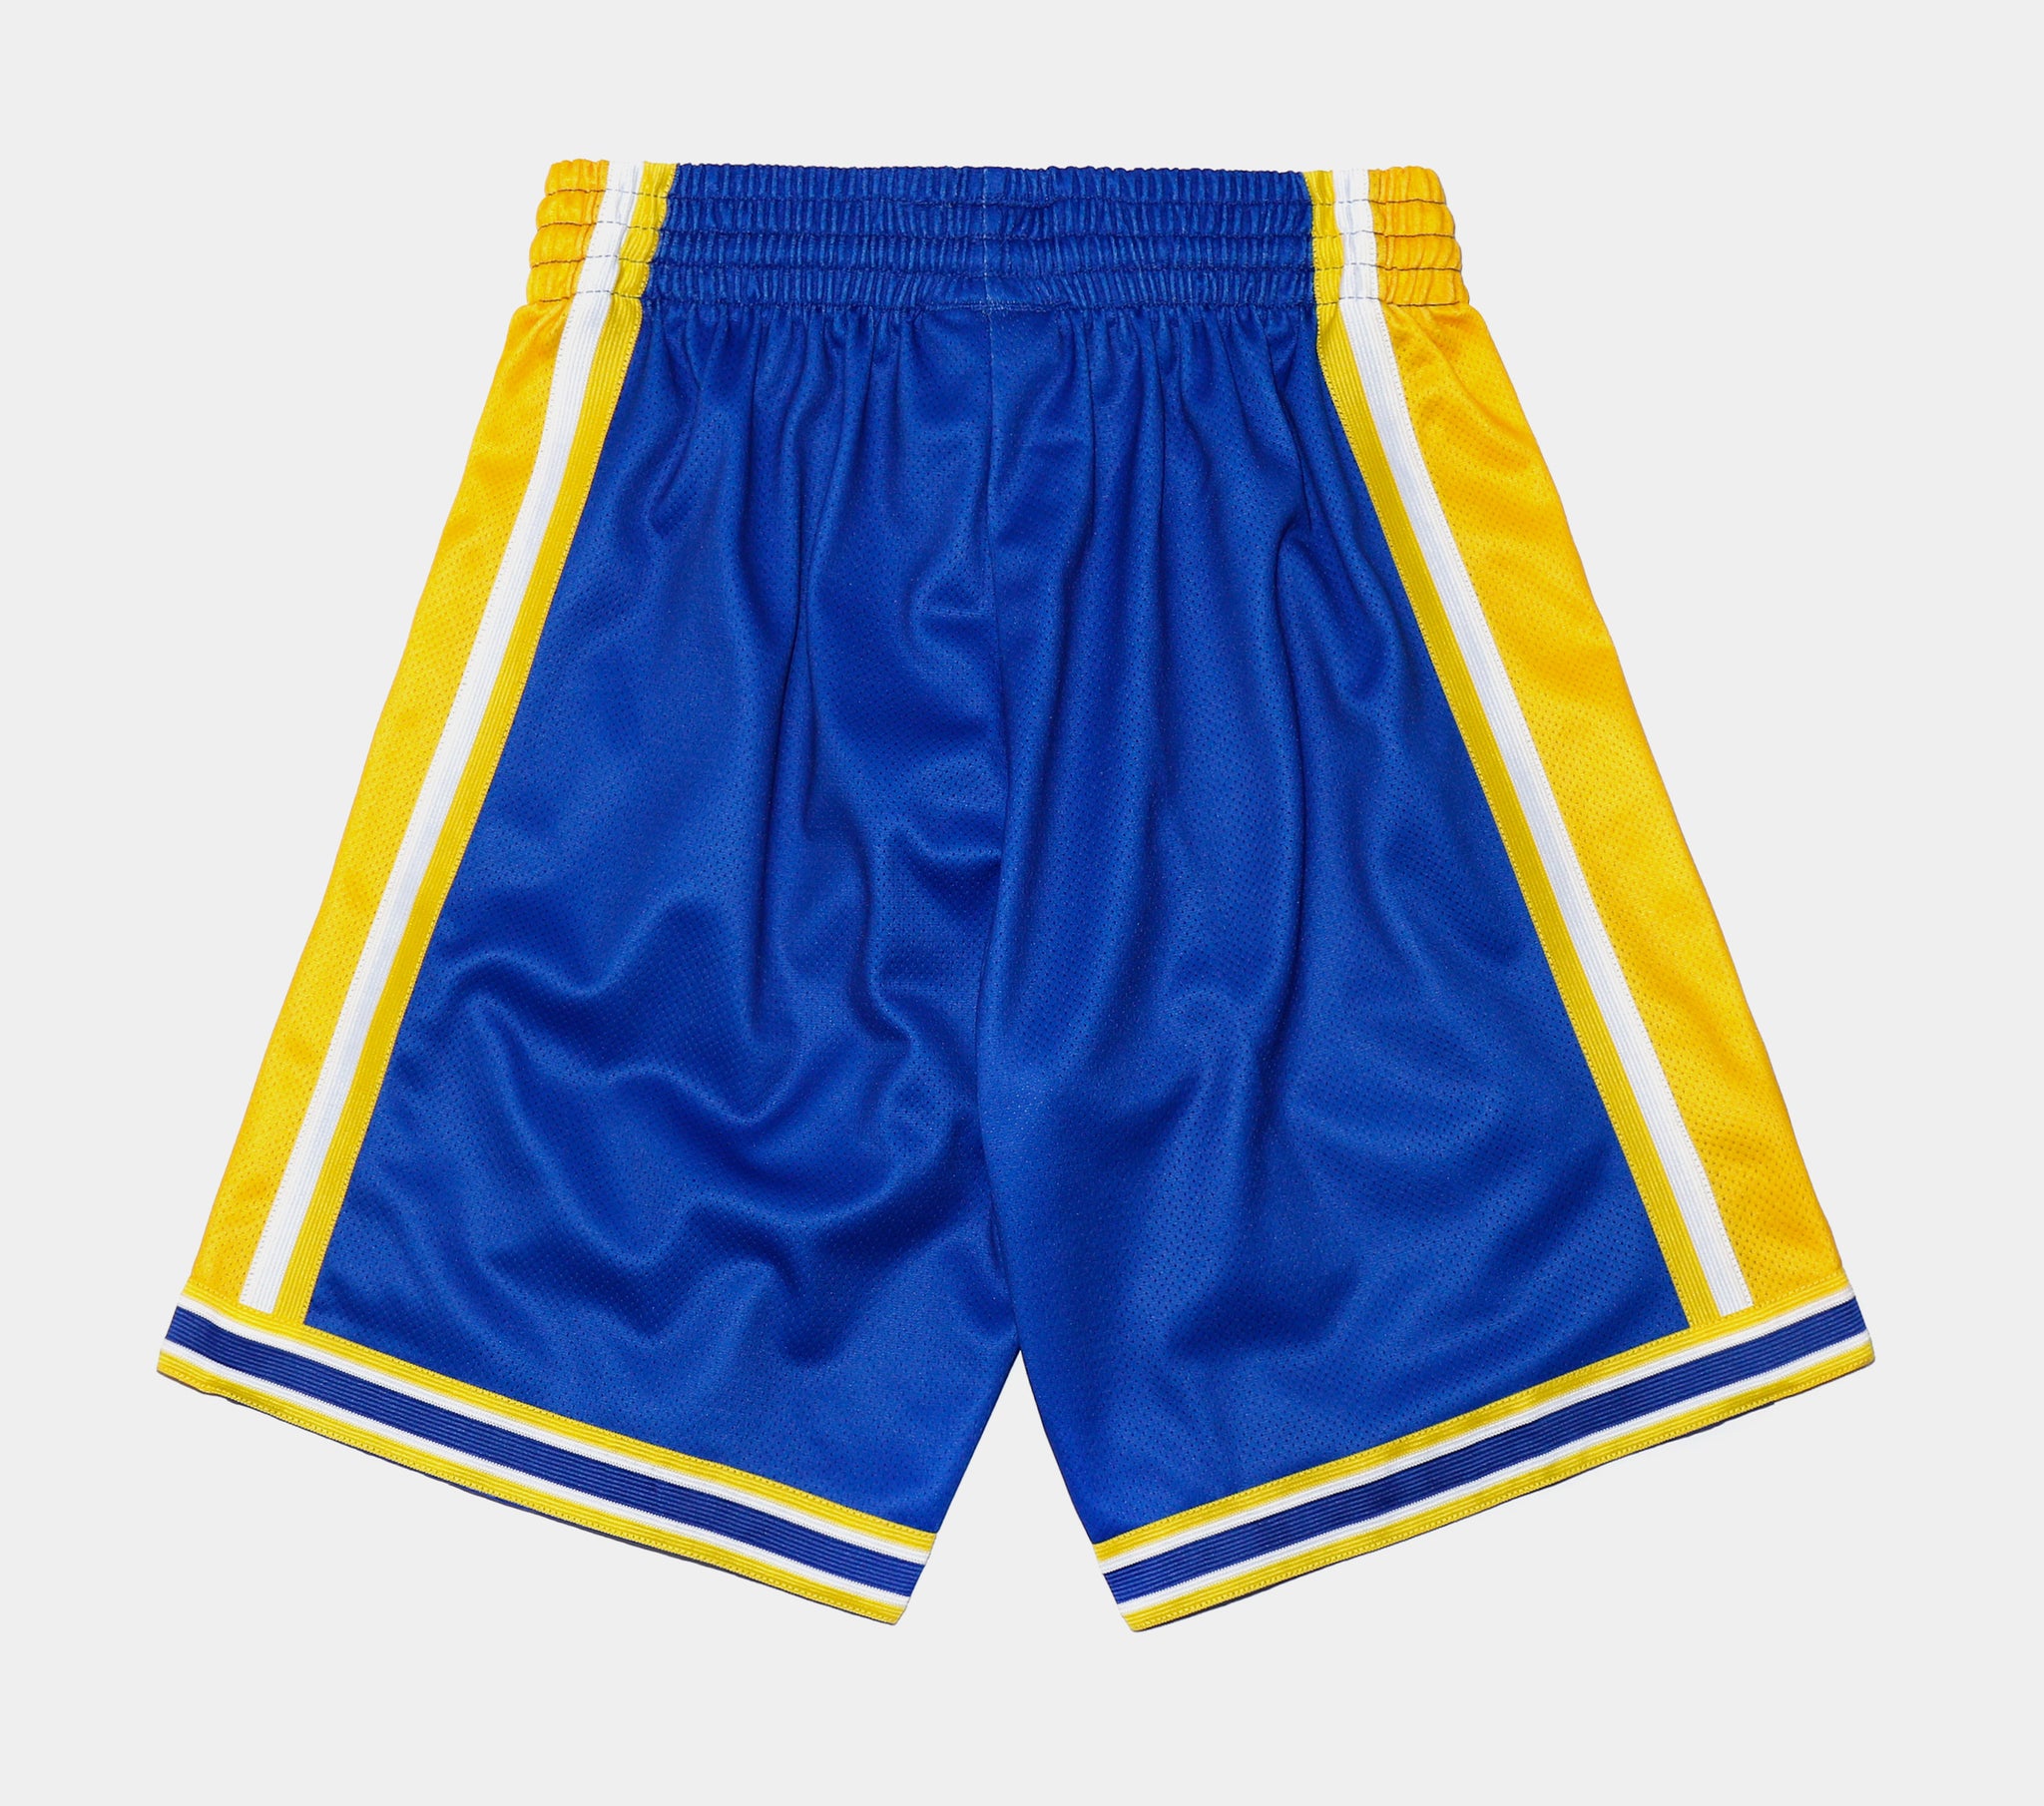 NBA Big Face 2.0 Golden State Warriors Shorts Mens Shorts (Blue/Yellow)